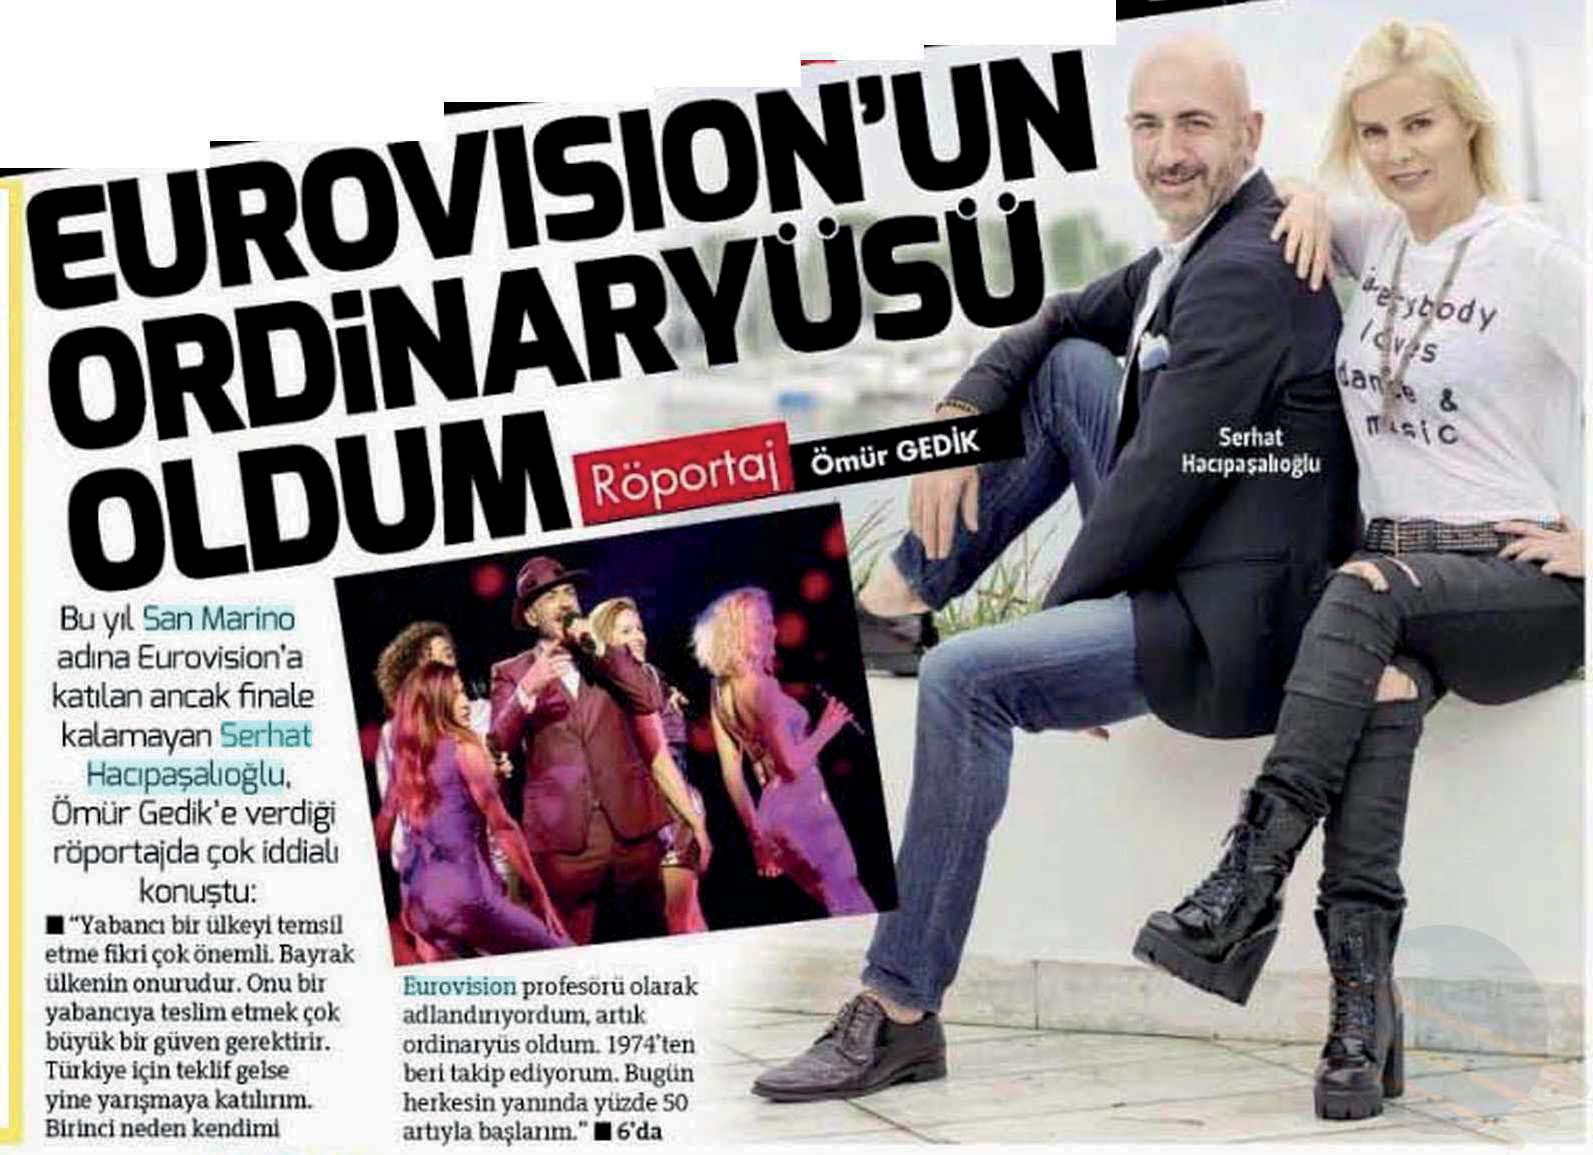 Eurovision'un Ordinaryüsü Oldum - 12.06.2016 - Hürriyet Kelebek